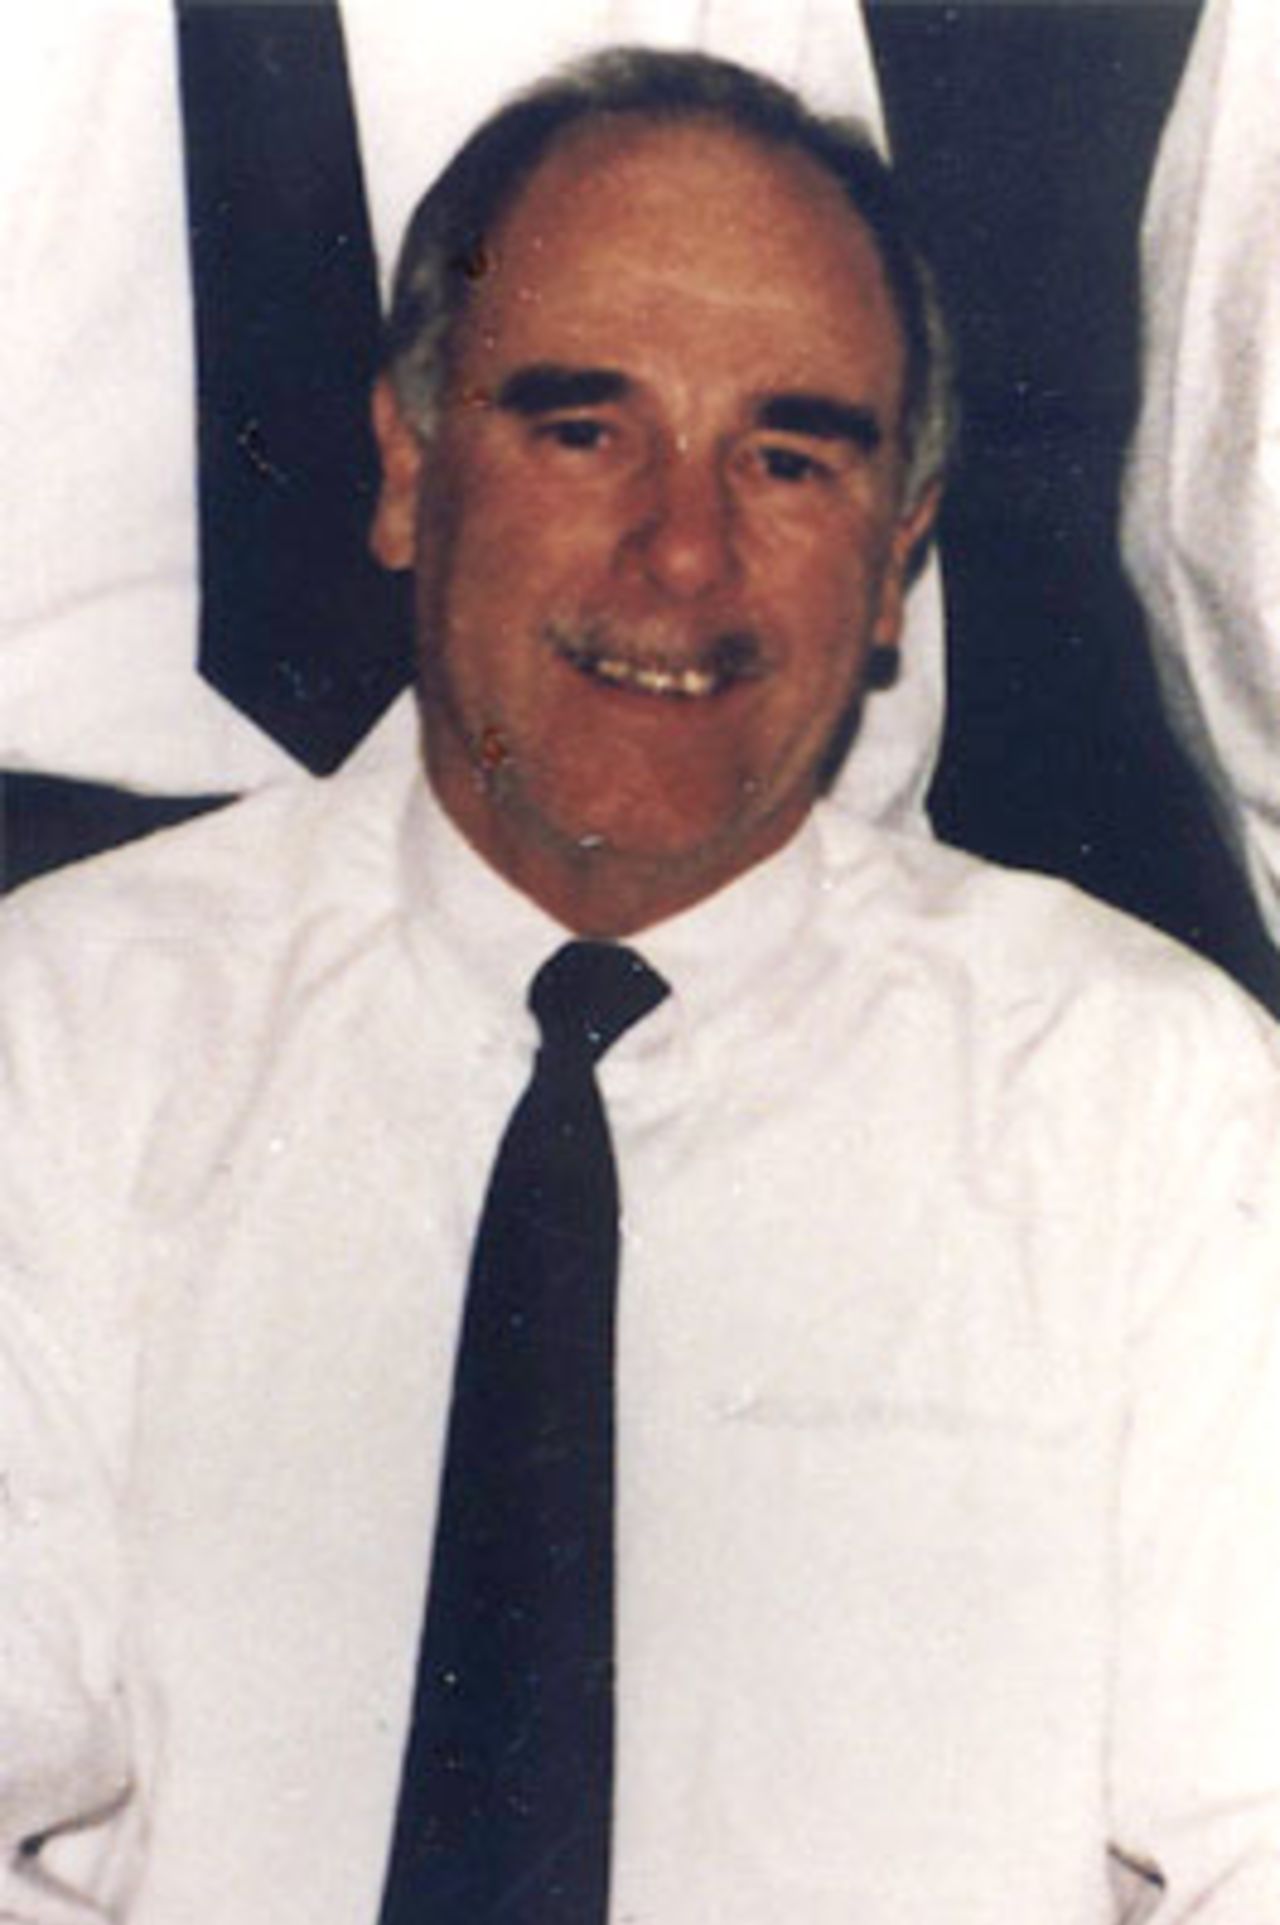 Portrait of Steve Dunne - 2000/01 New Zealand Cricket international panel umpire